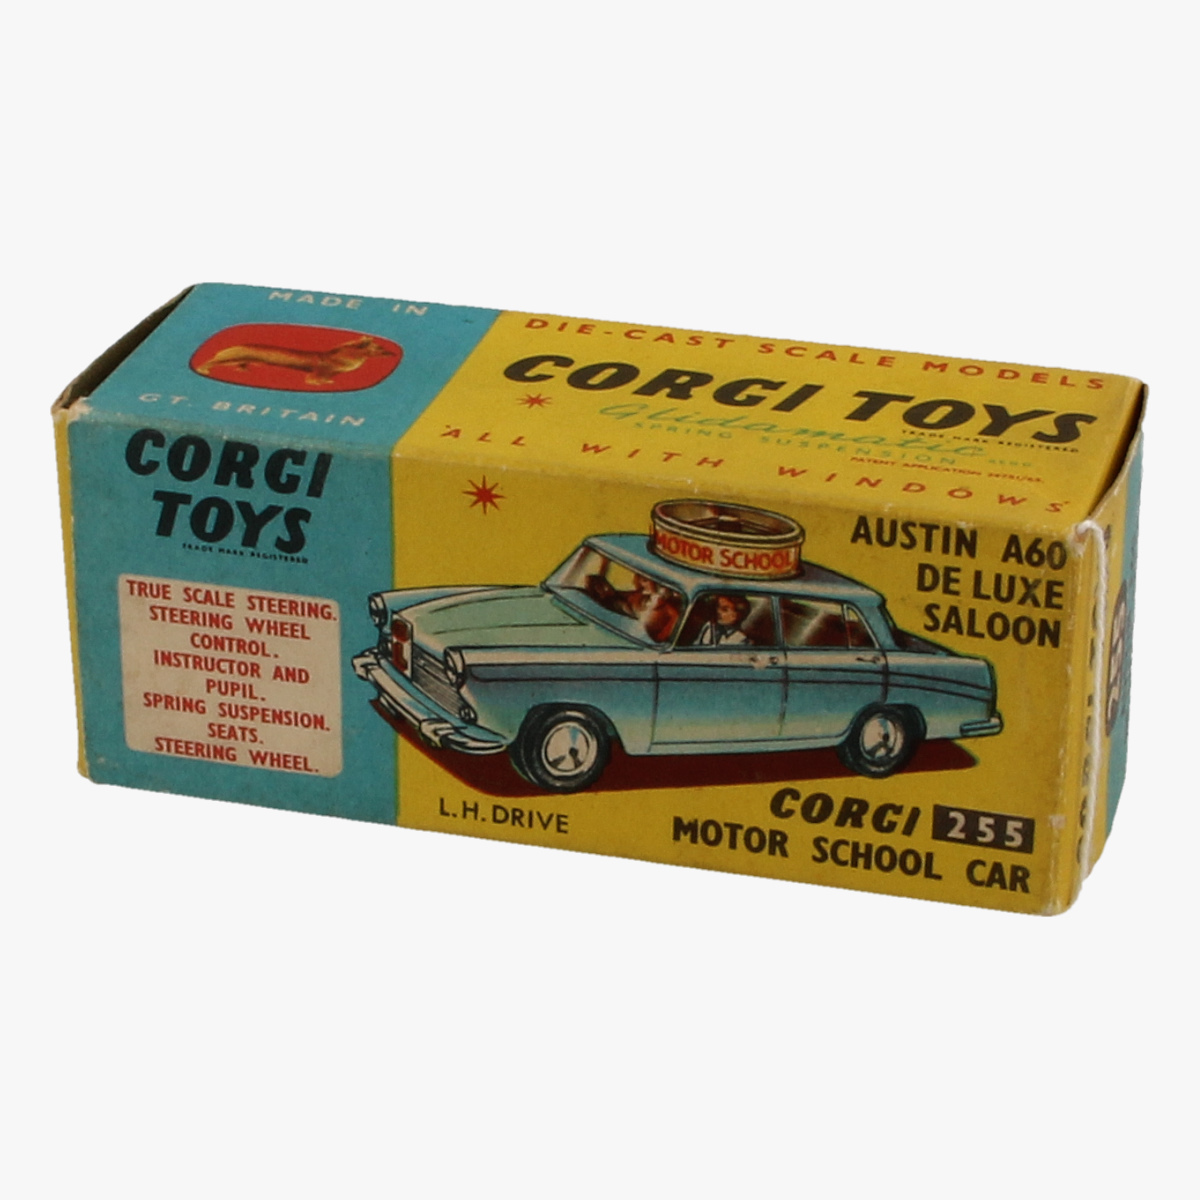 Afbeeldingen van Corgi Toys. Austin A60 De Luxe Saloon, Motor School Car 255